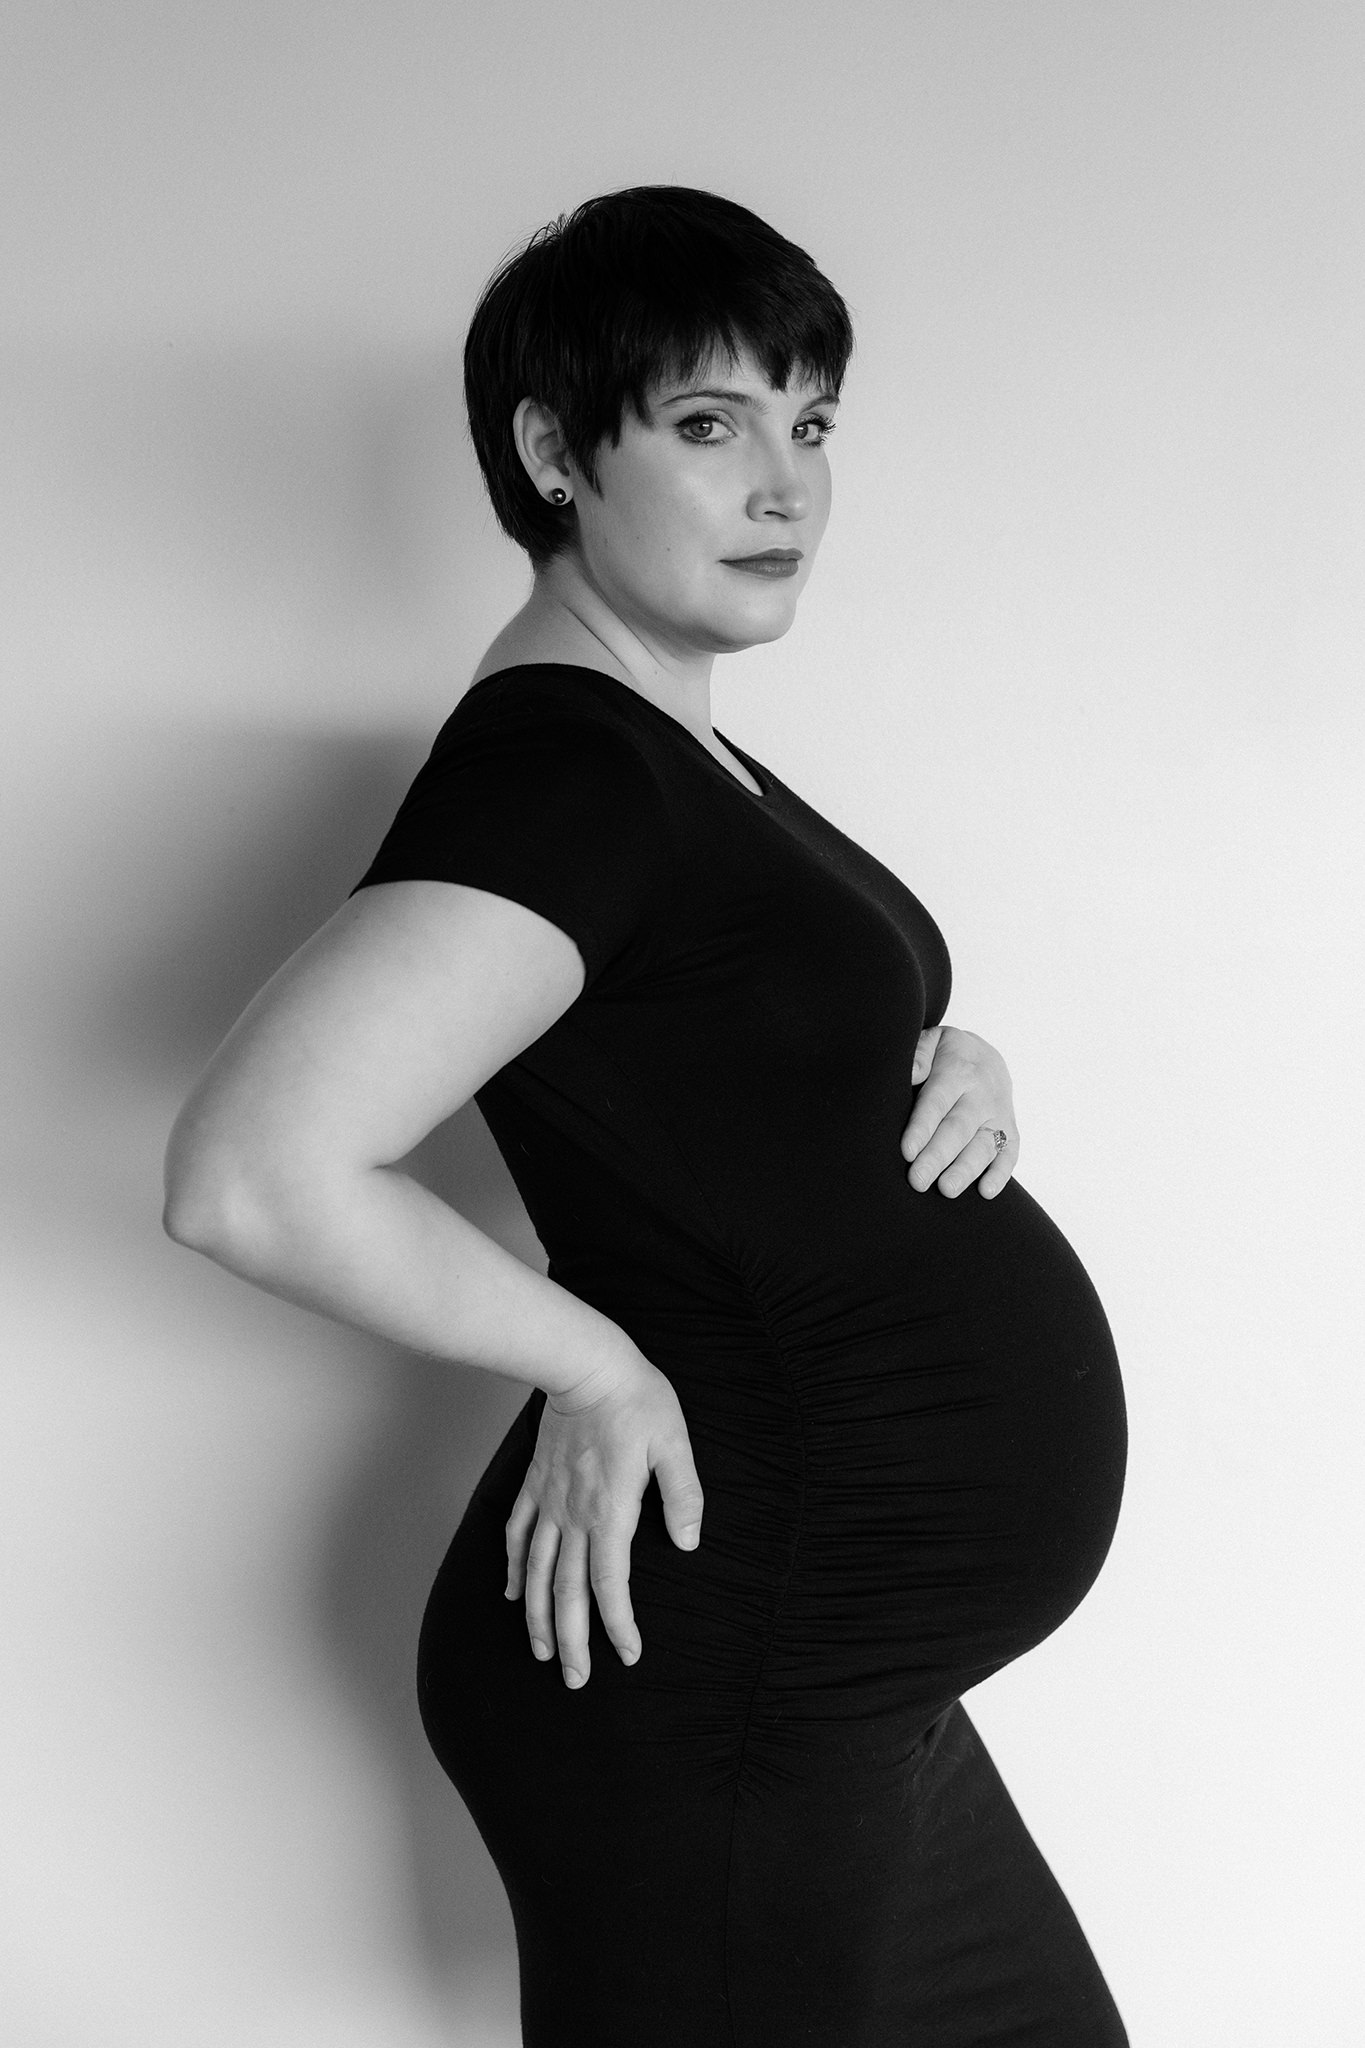 Minimal black and white maternity photo